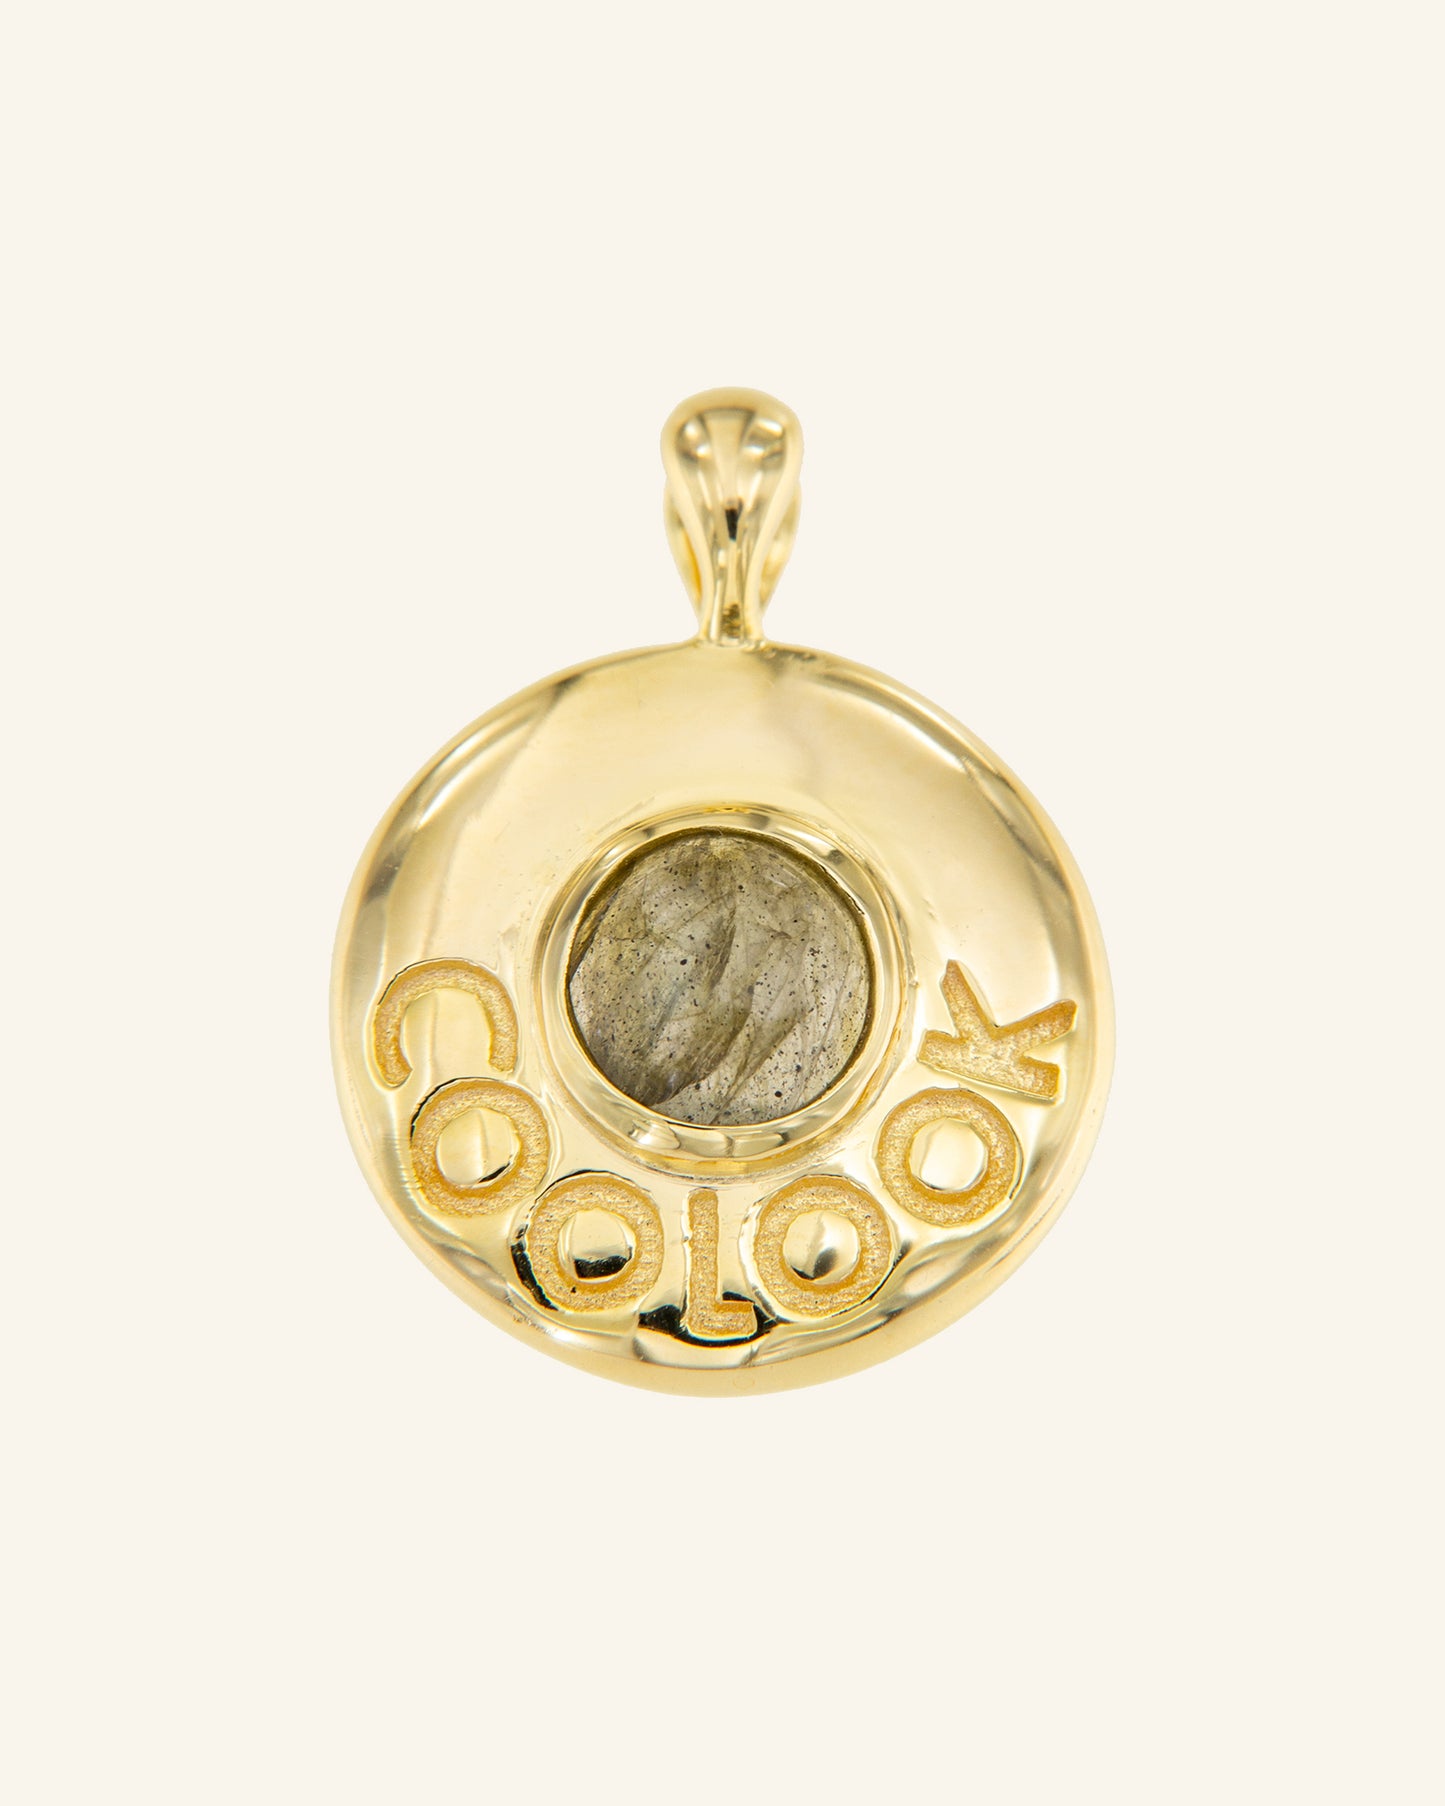 Atoll pendant with labradorite